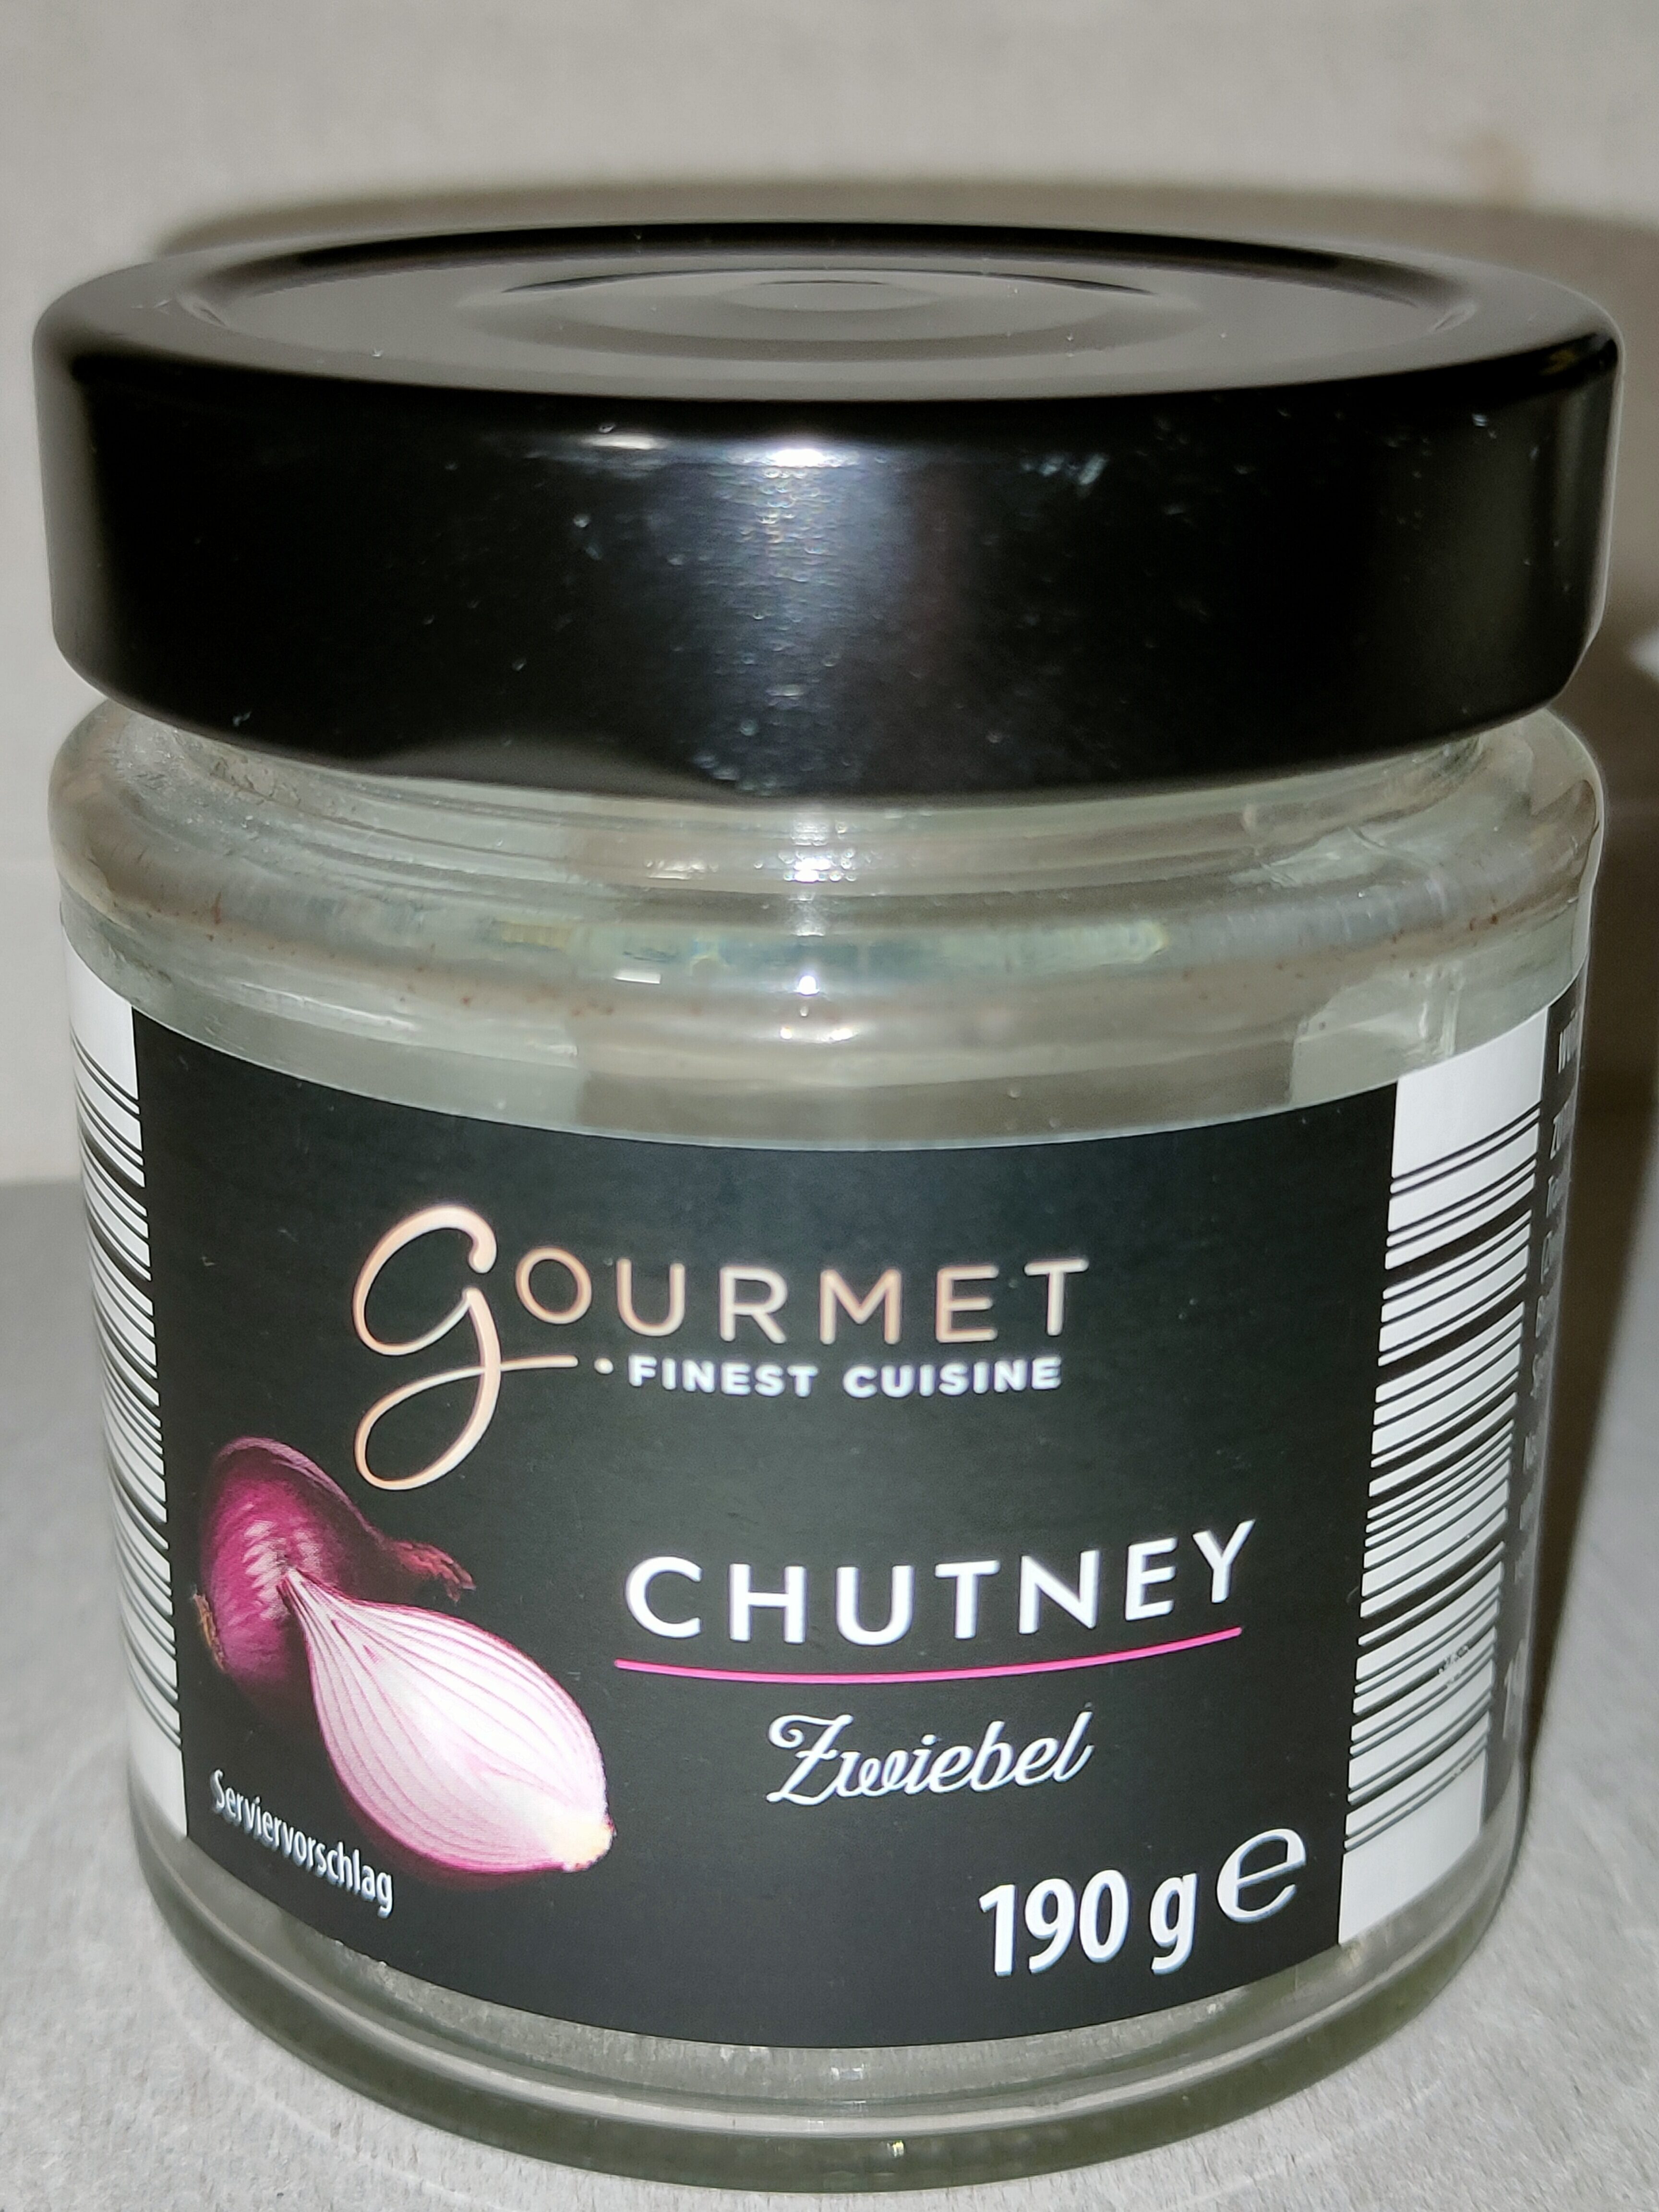 Chutney - Zwiebel - Product - de